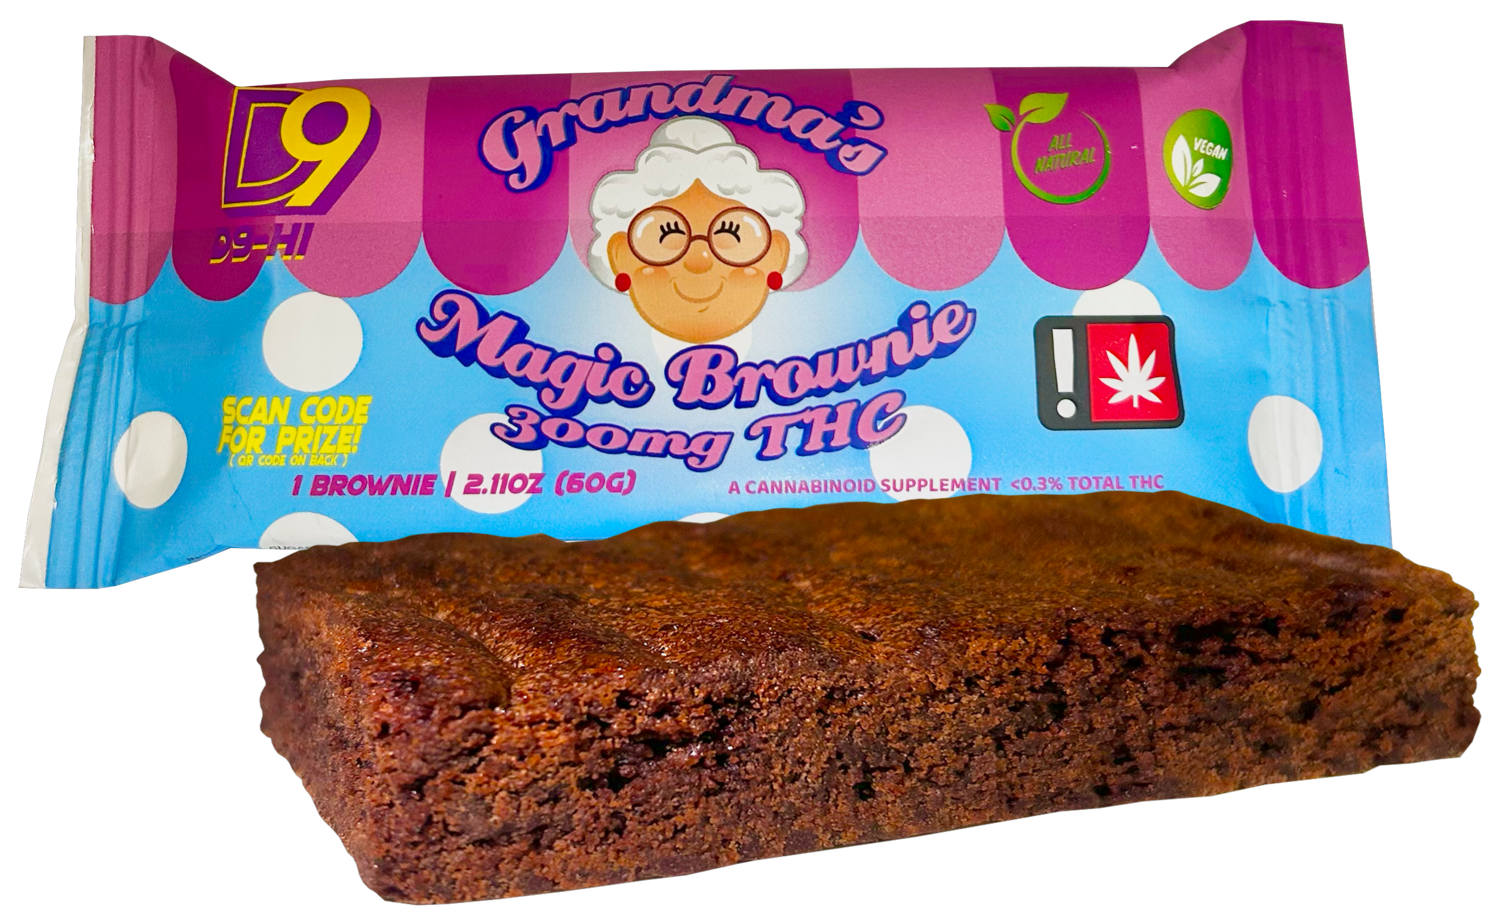 D9 Hi Grandmas Magic Brownie 300mg